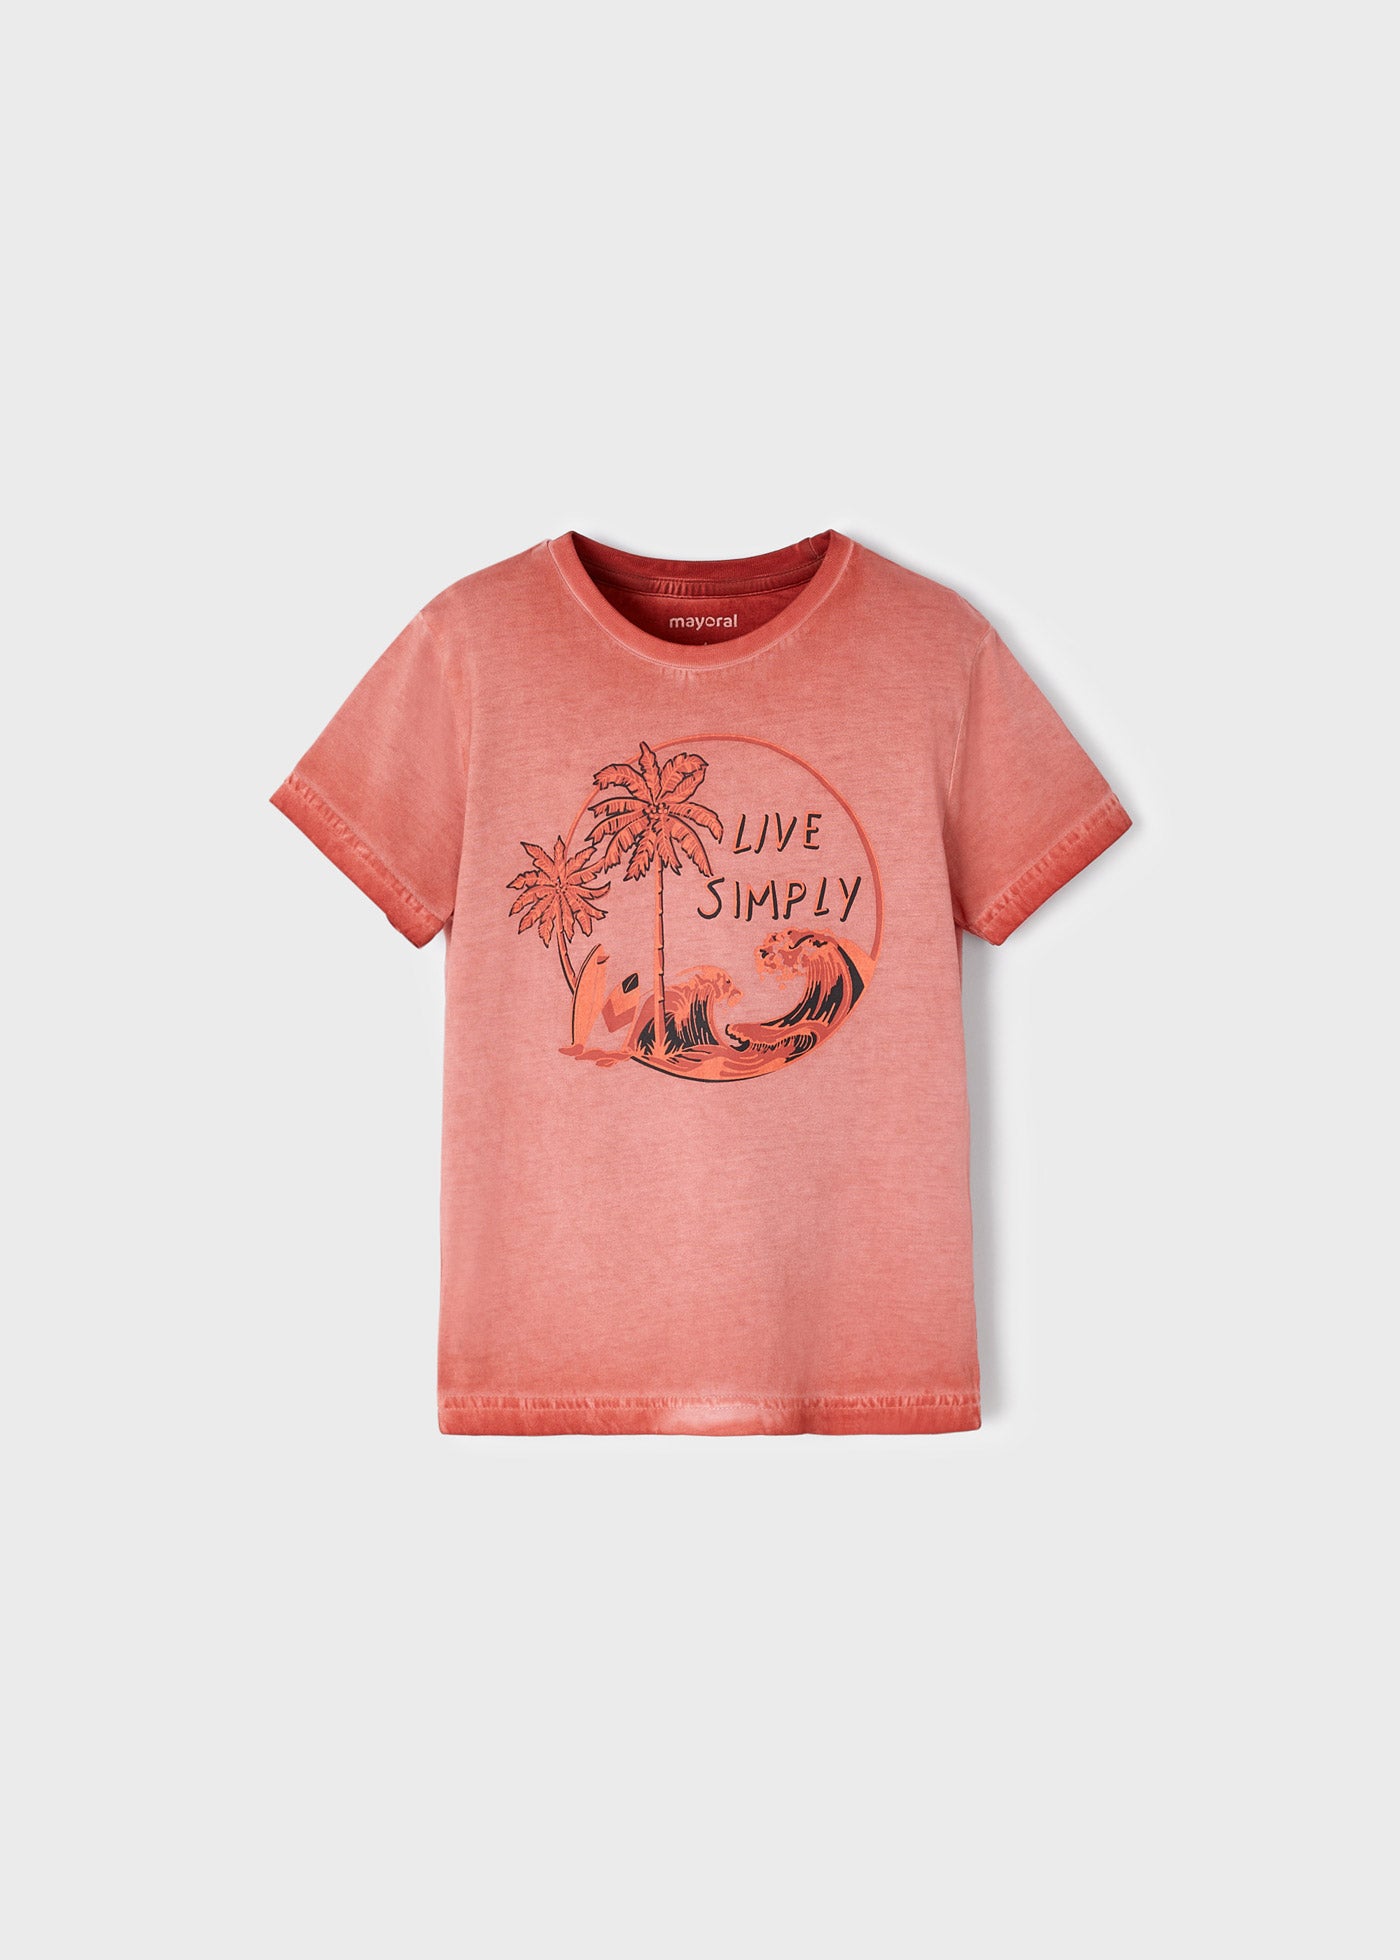 Mayoral Mini T-Shirt w/ Beach Graphic_ Terracotta 3022-15